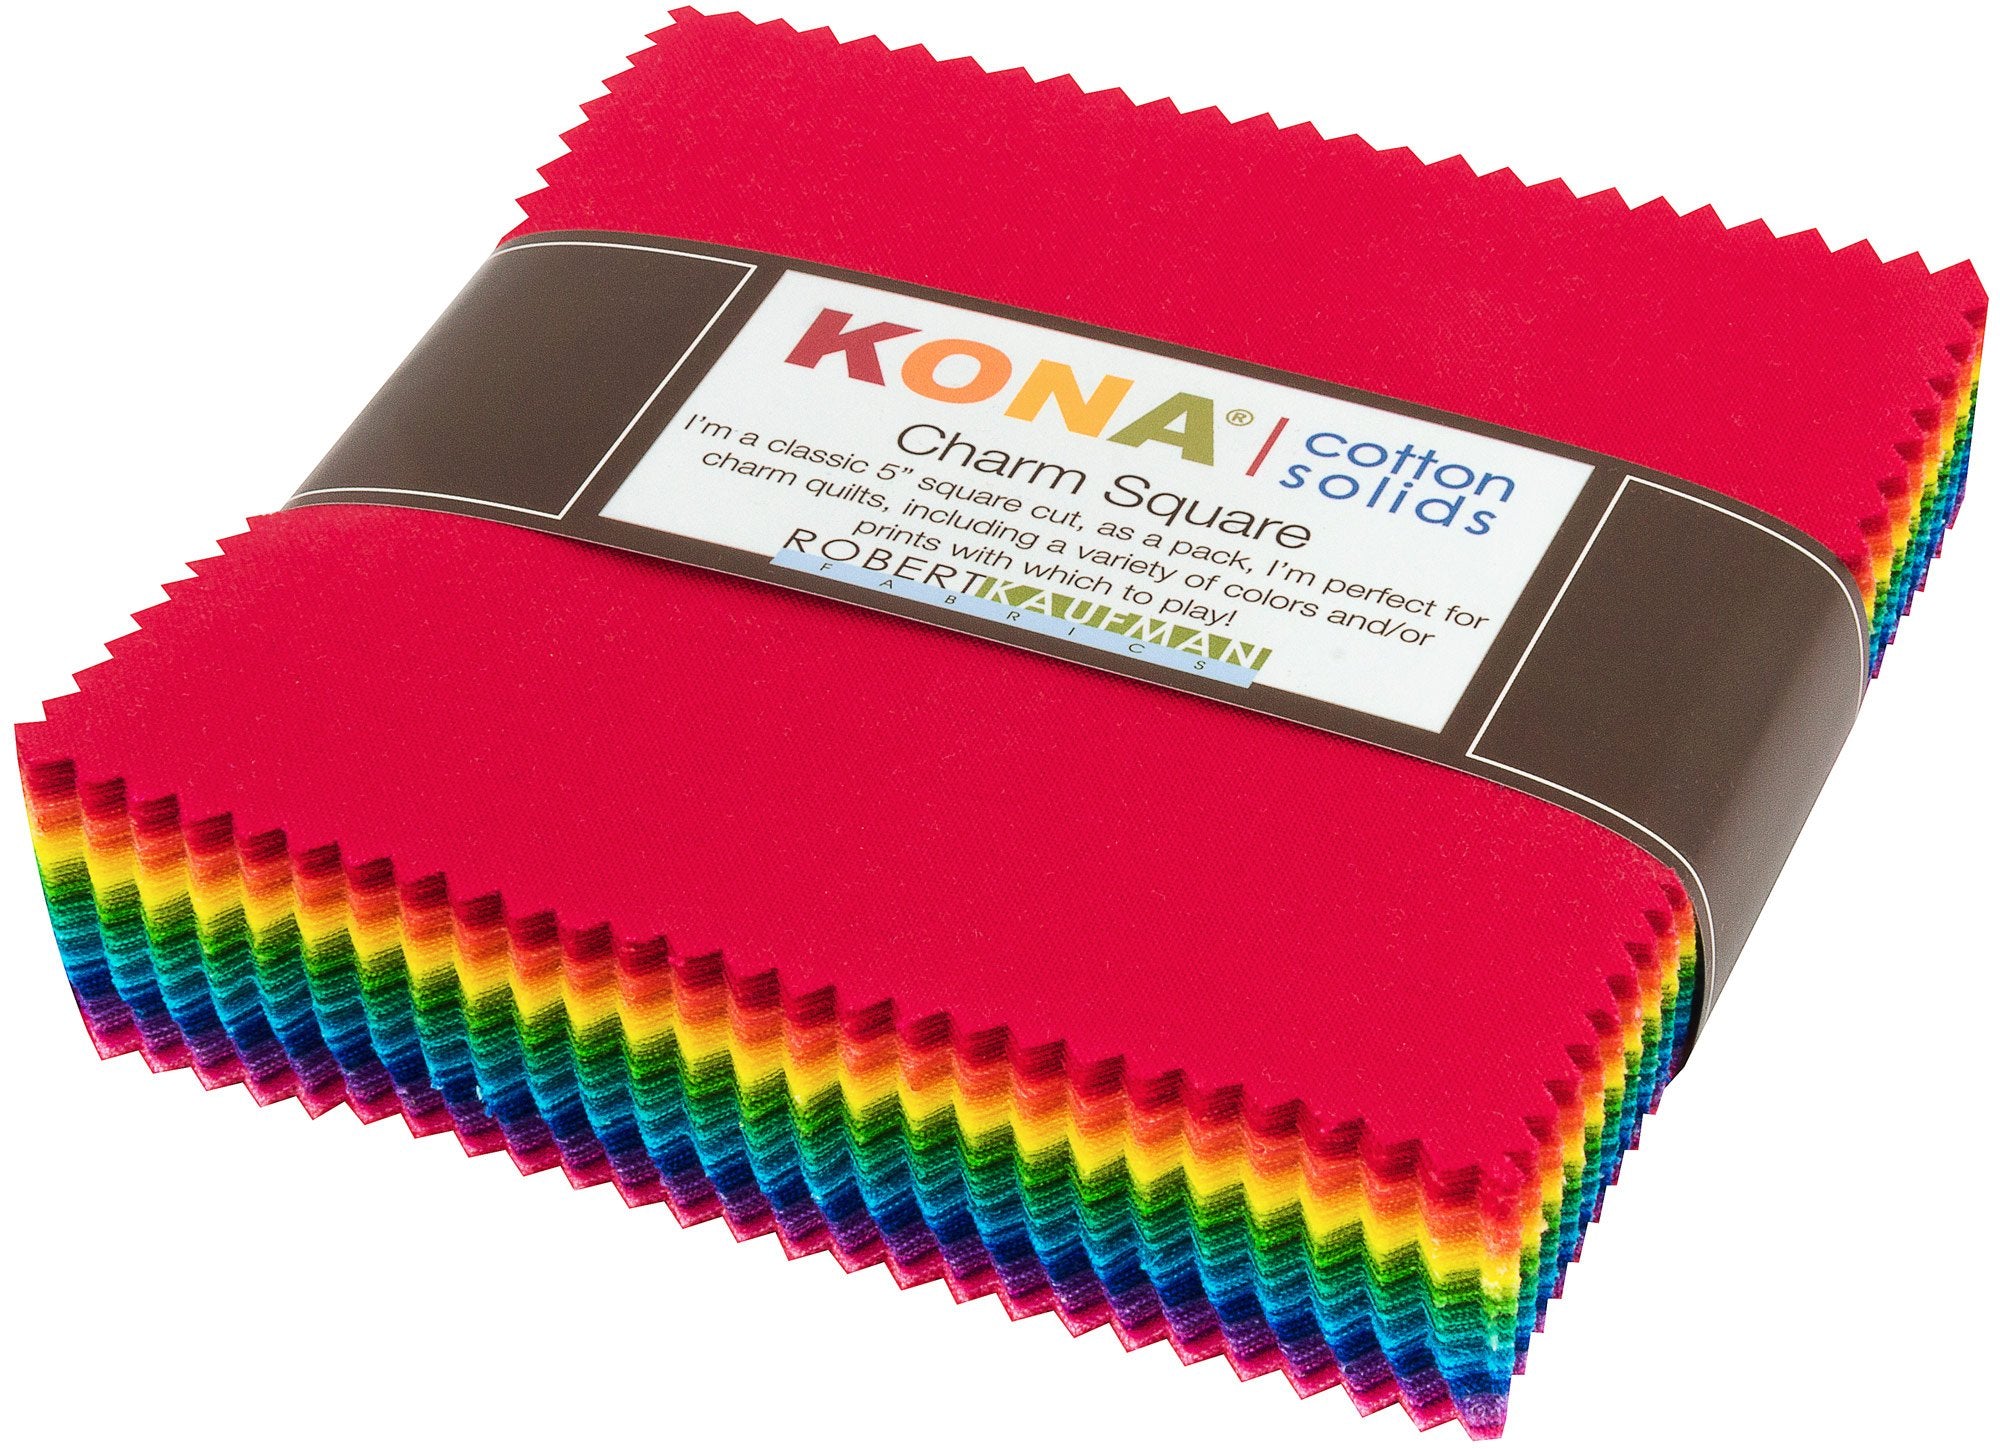 Kona Cotton Solids Bright Charm Square 85 5-inch Squares Charm Pack Robert Kaufman CHS-693-85